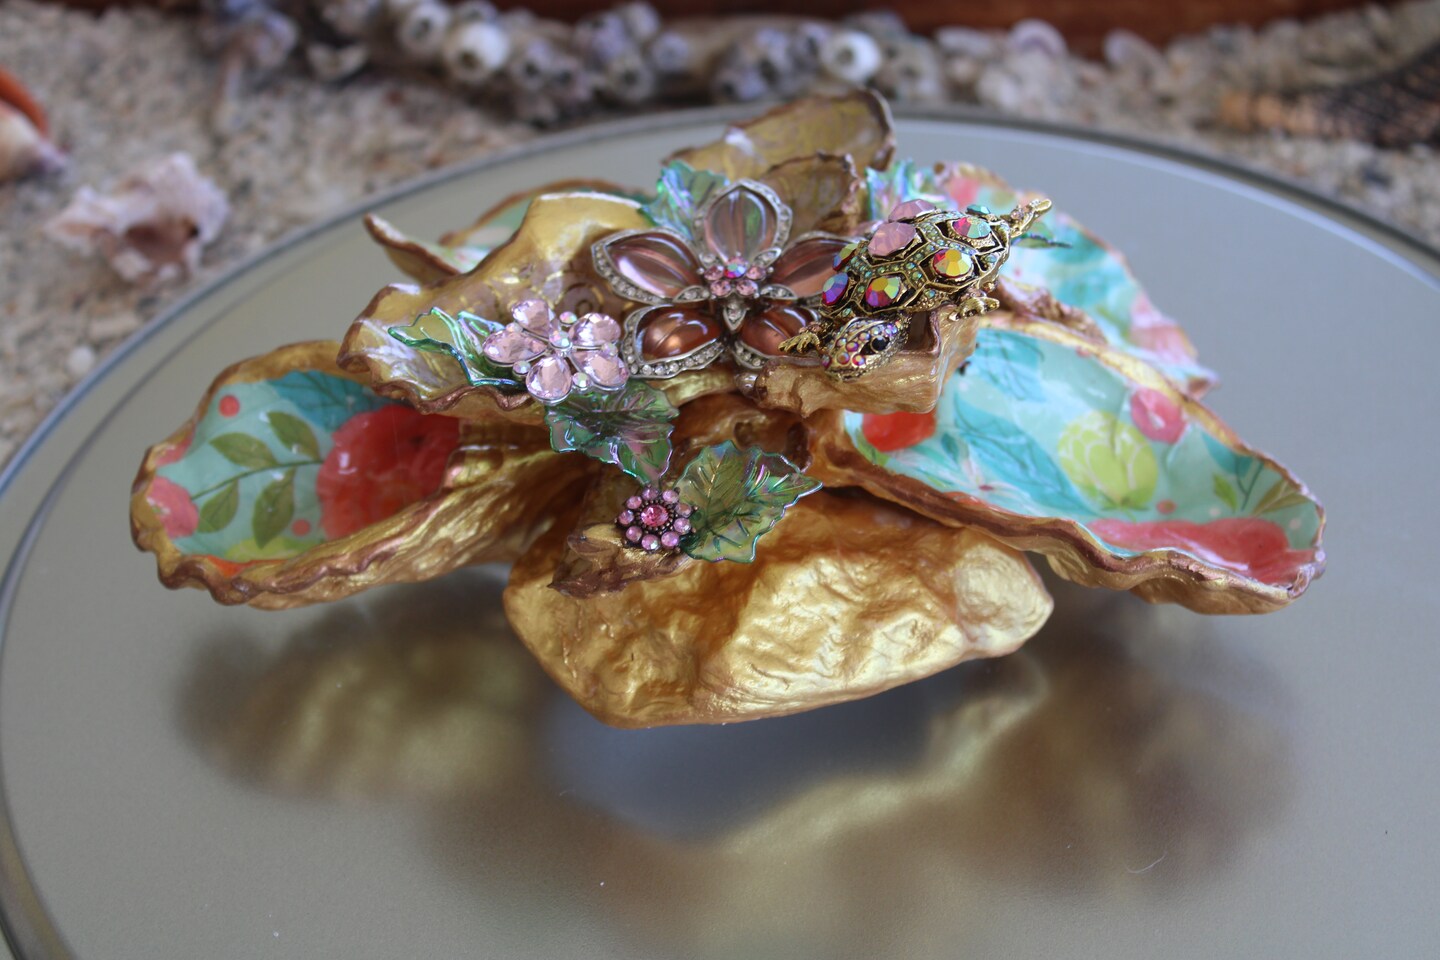 Hand-Crafted Seashell Ring Dishes - Coastal Decor